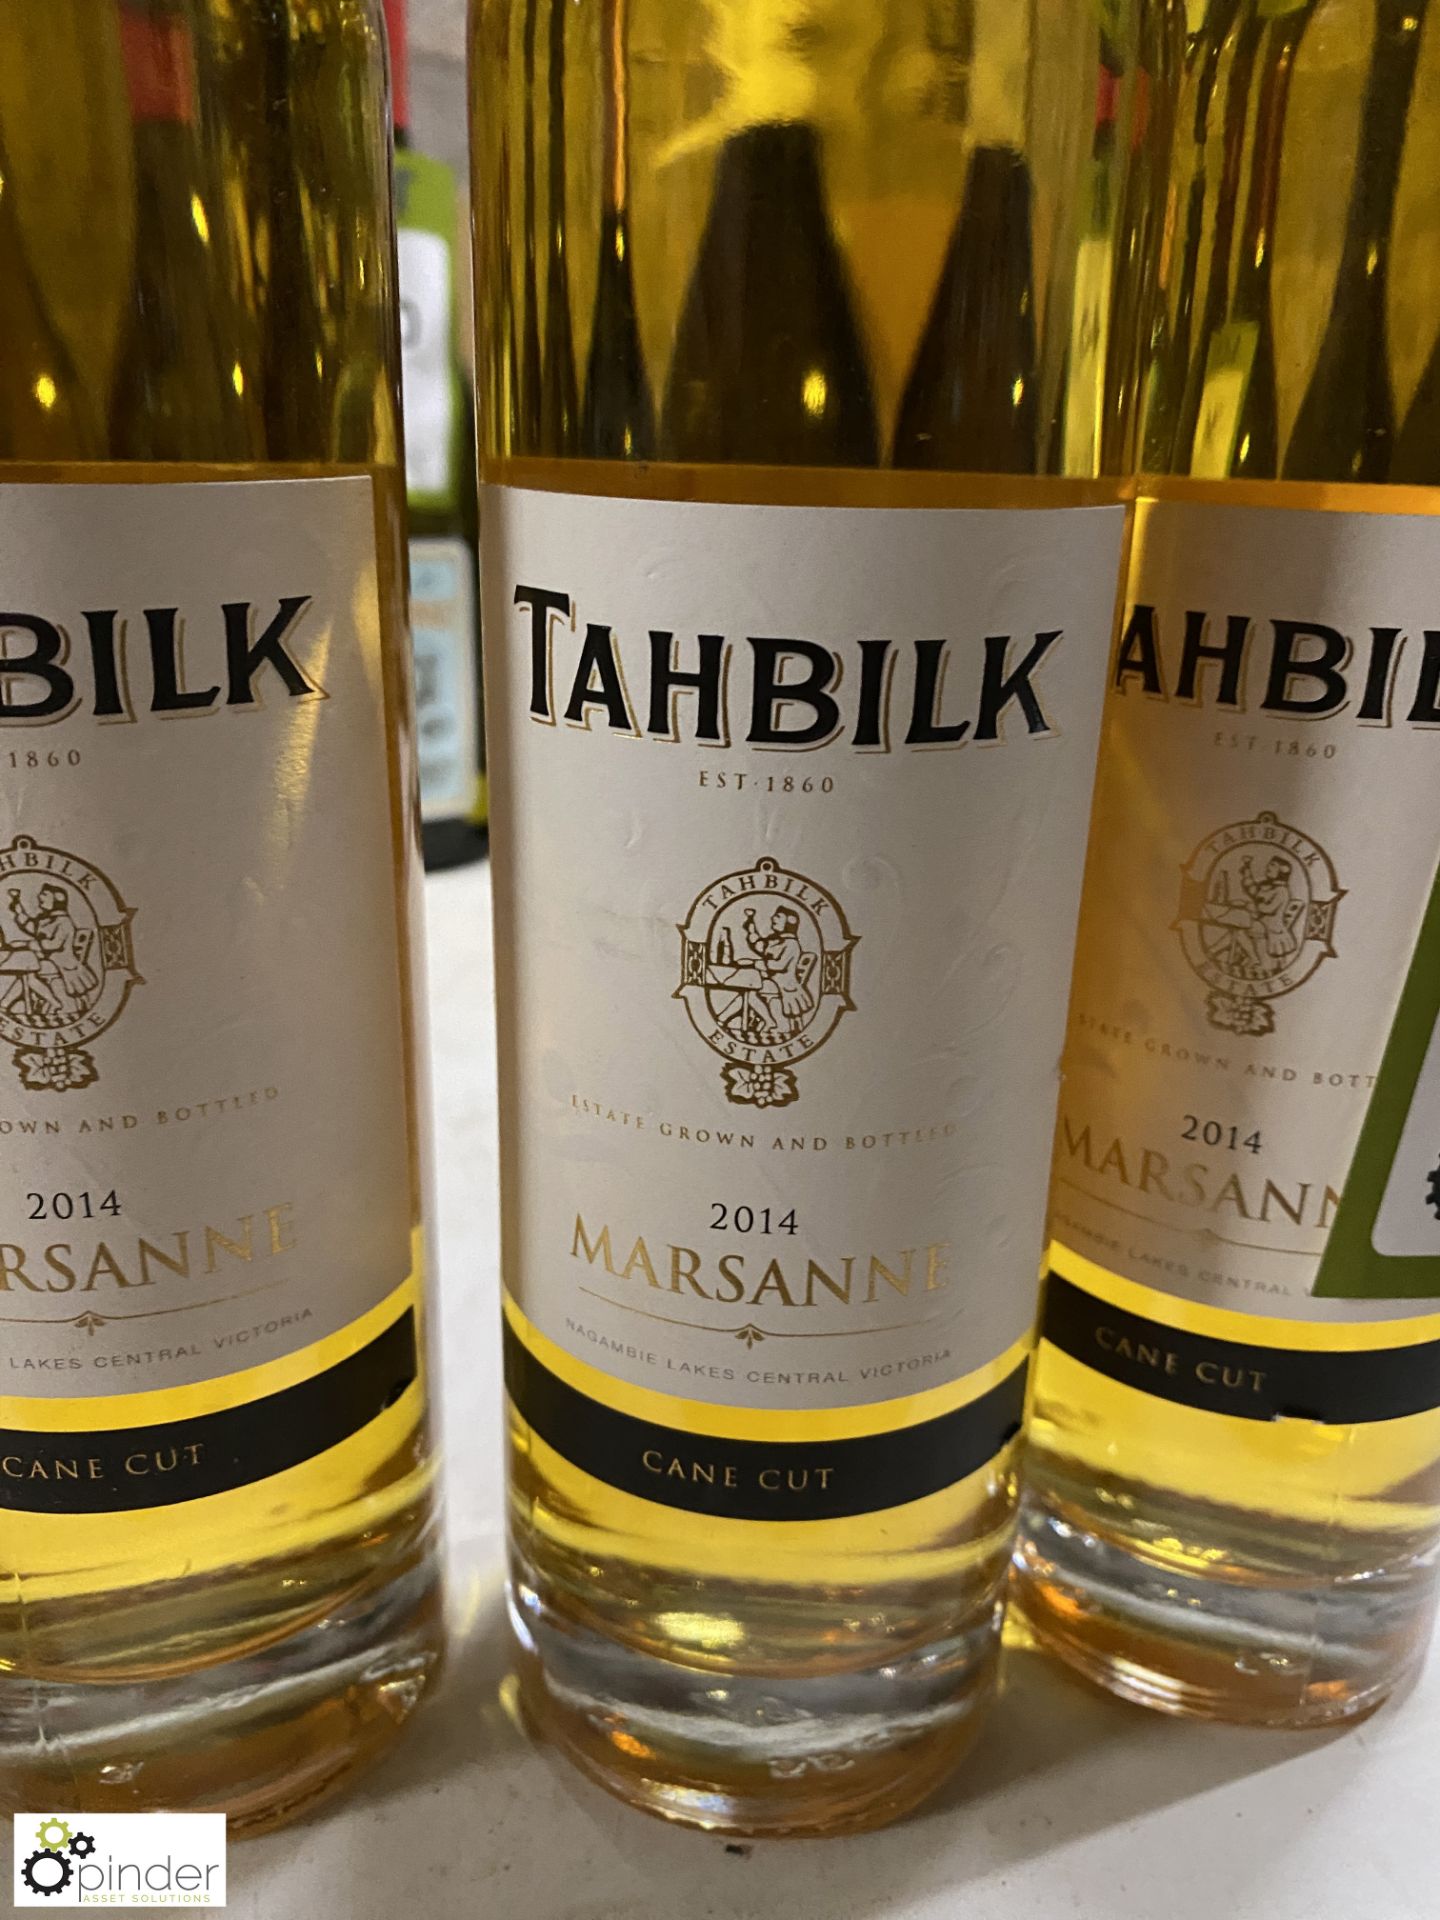 3 bottles Tahblik Marsonne (2014) 500ml (LOCATION: Devon) - Image 2 of 4